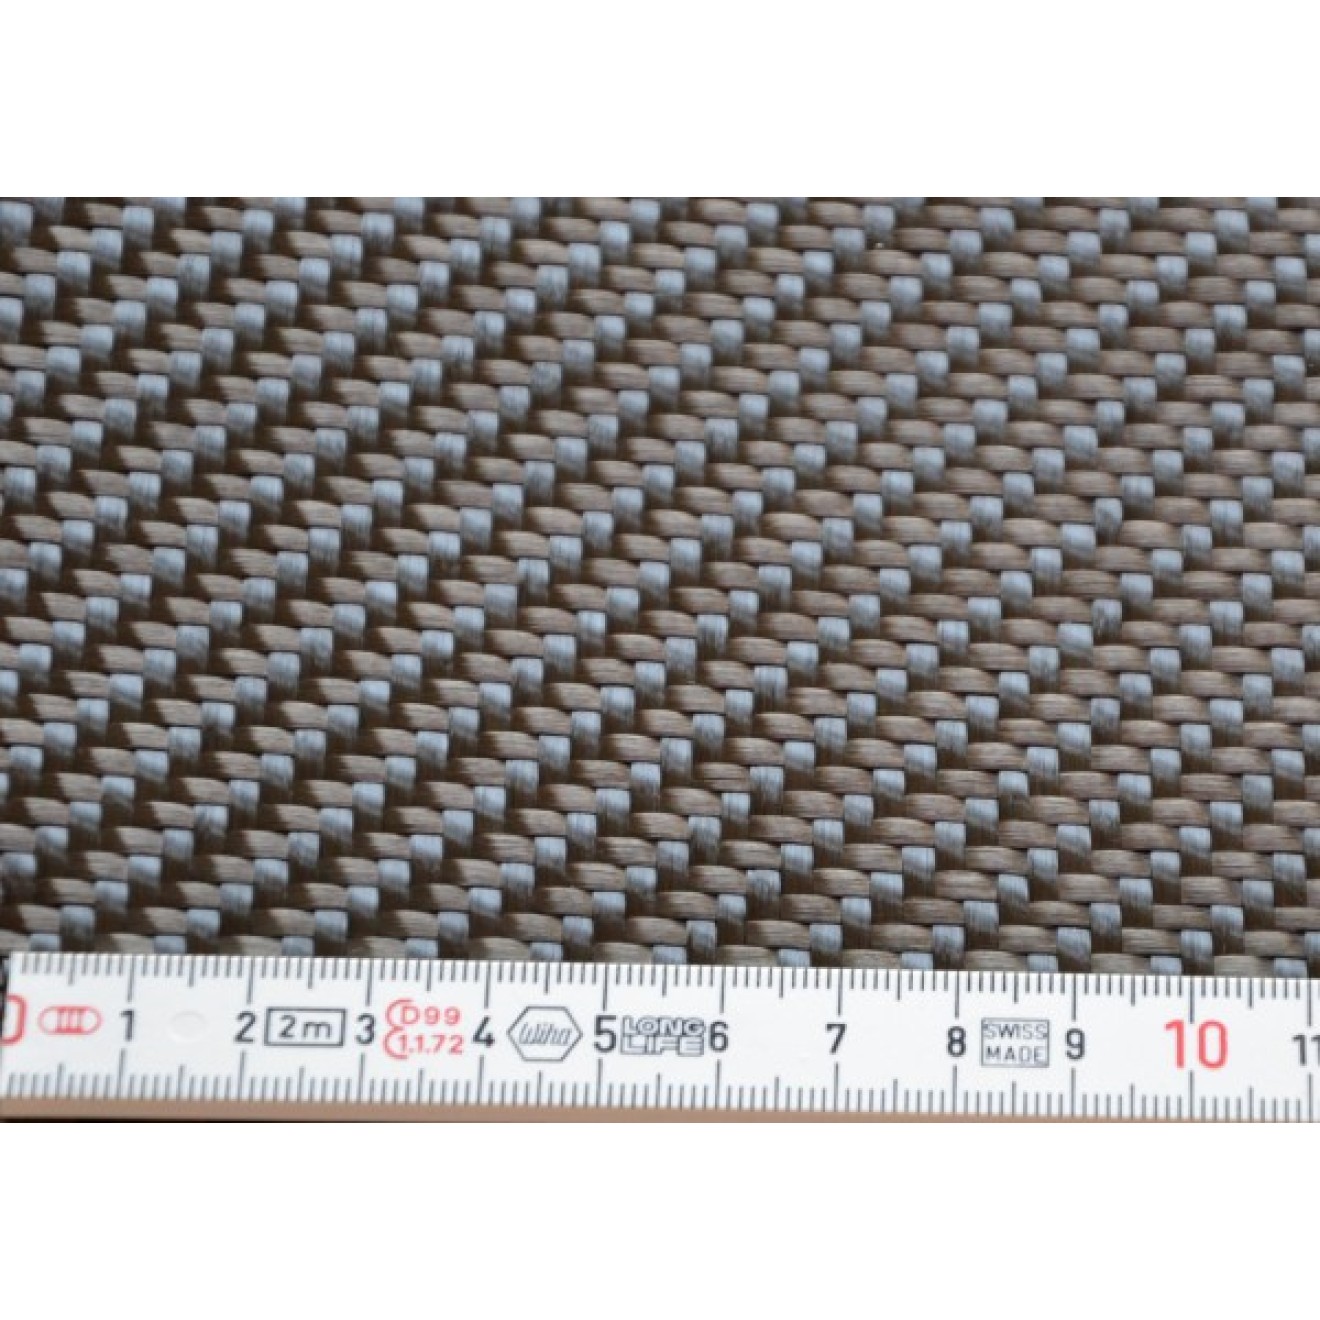 Woven carbon fiber fabric 12K 600g/m², twill